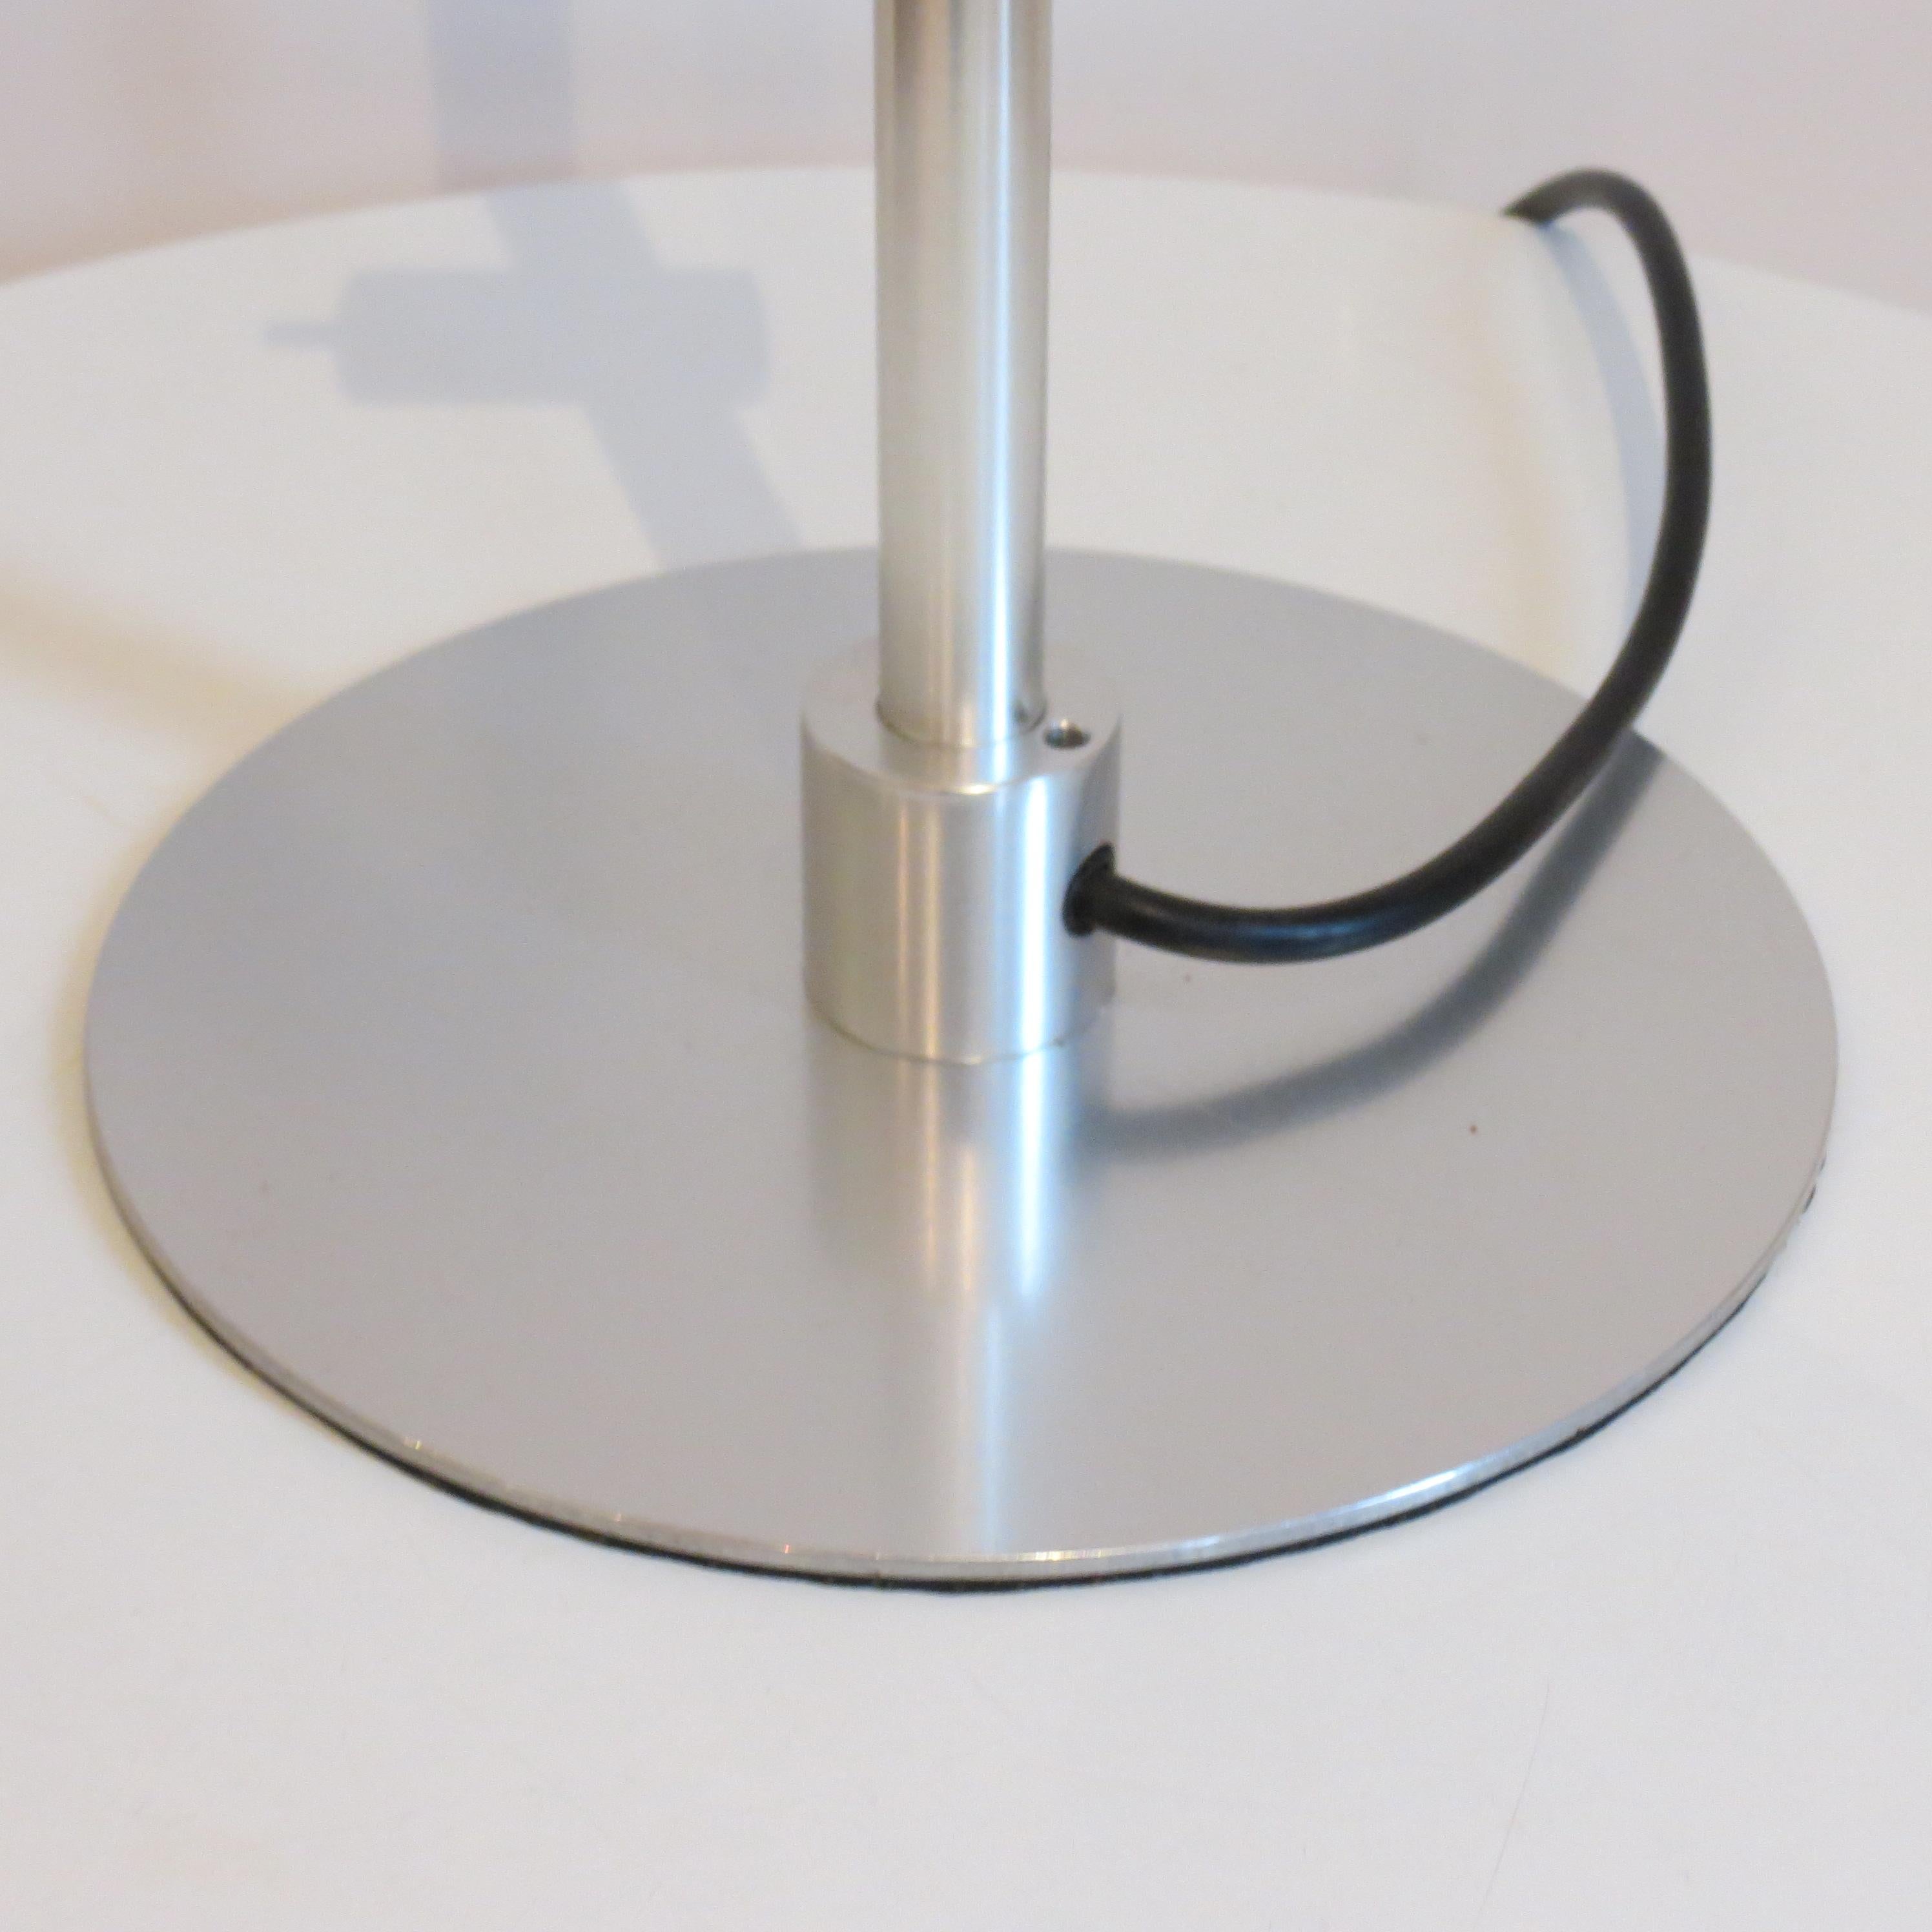 Rare Prototype Aluminium Desk Lamp by Peter Nelson 1960s For Sale 6